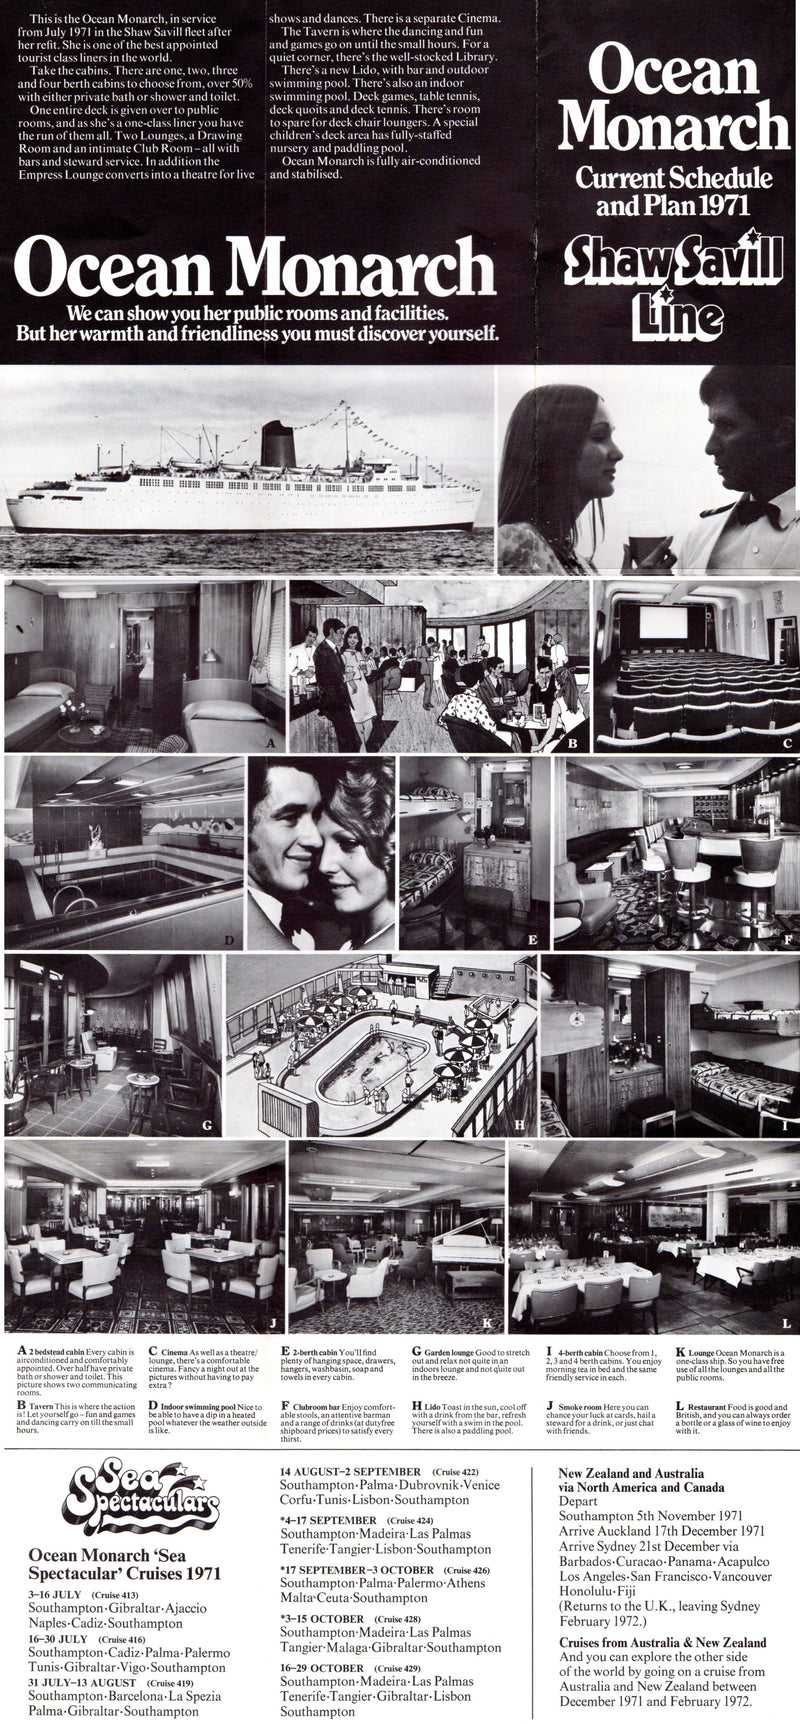 OCEAN MONARCH: 1957 - Deck plan & interiors from 1971